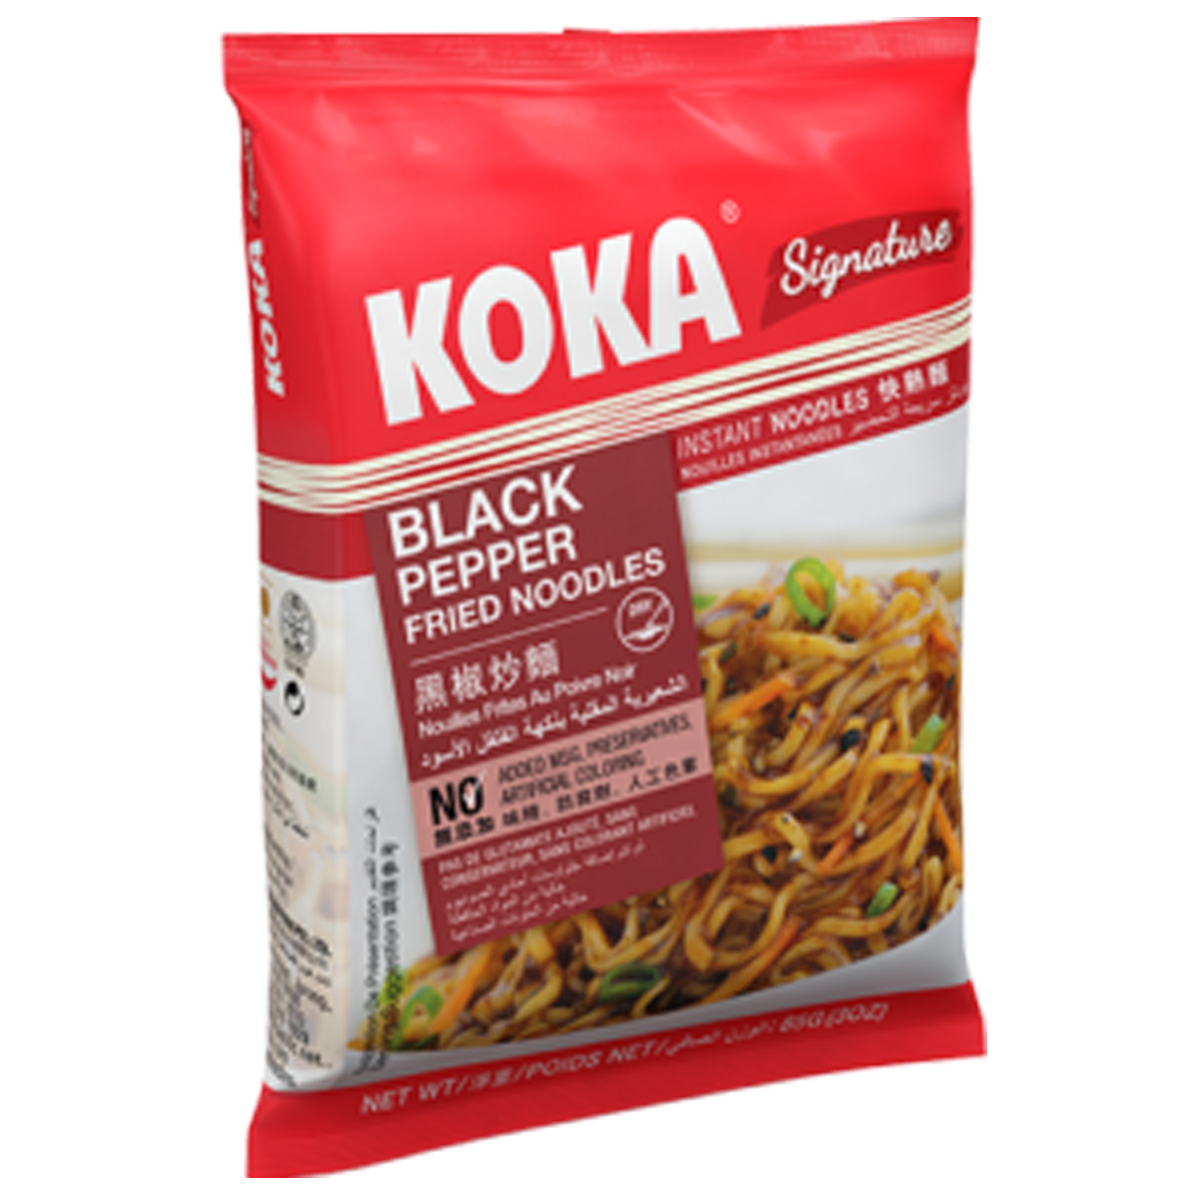 Koka Signature Black Pepper Fried Noodles 85g